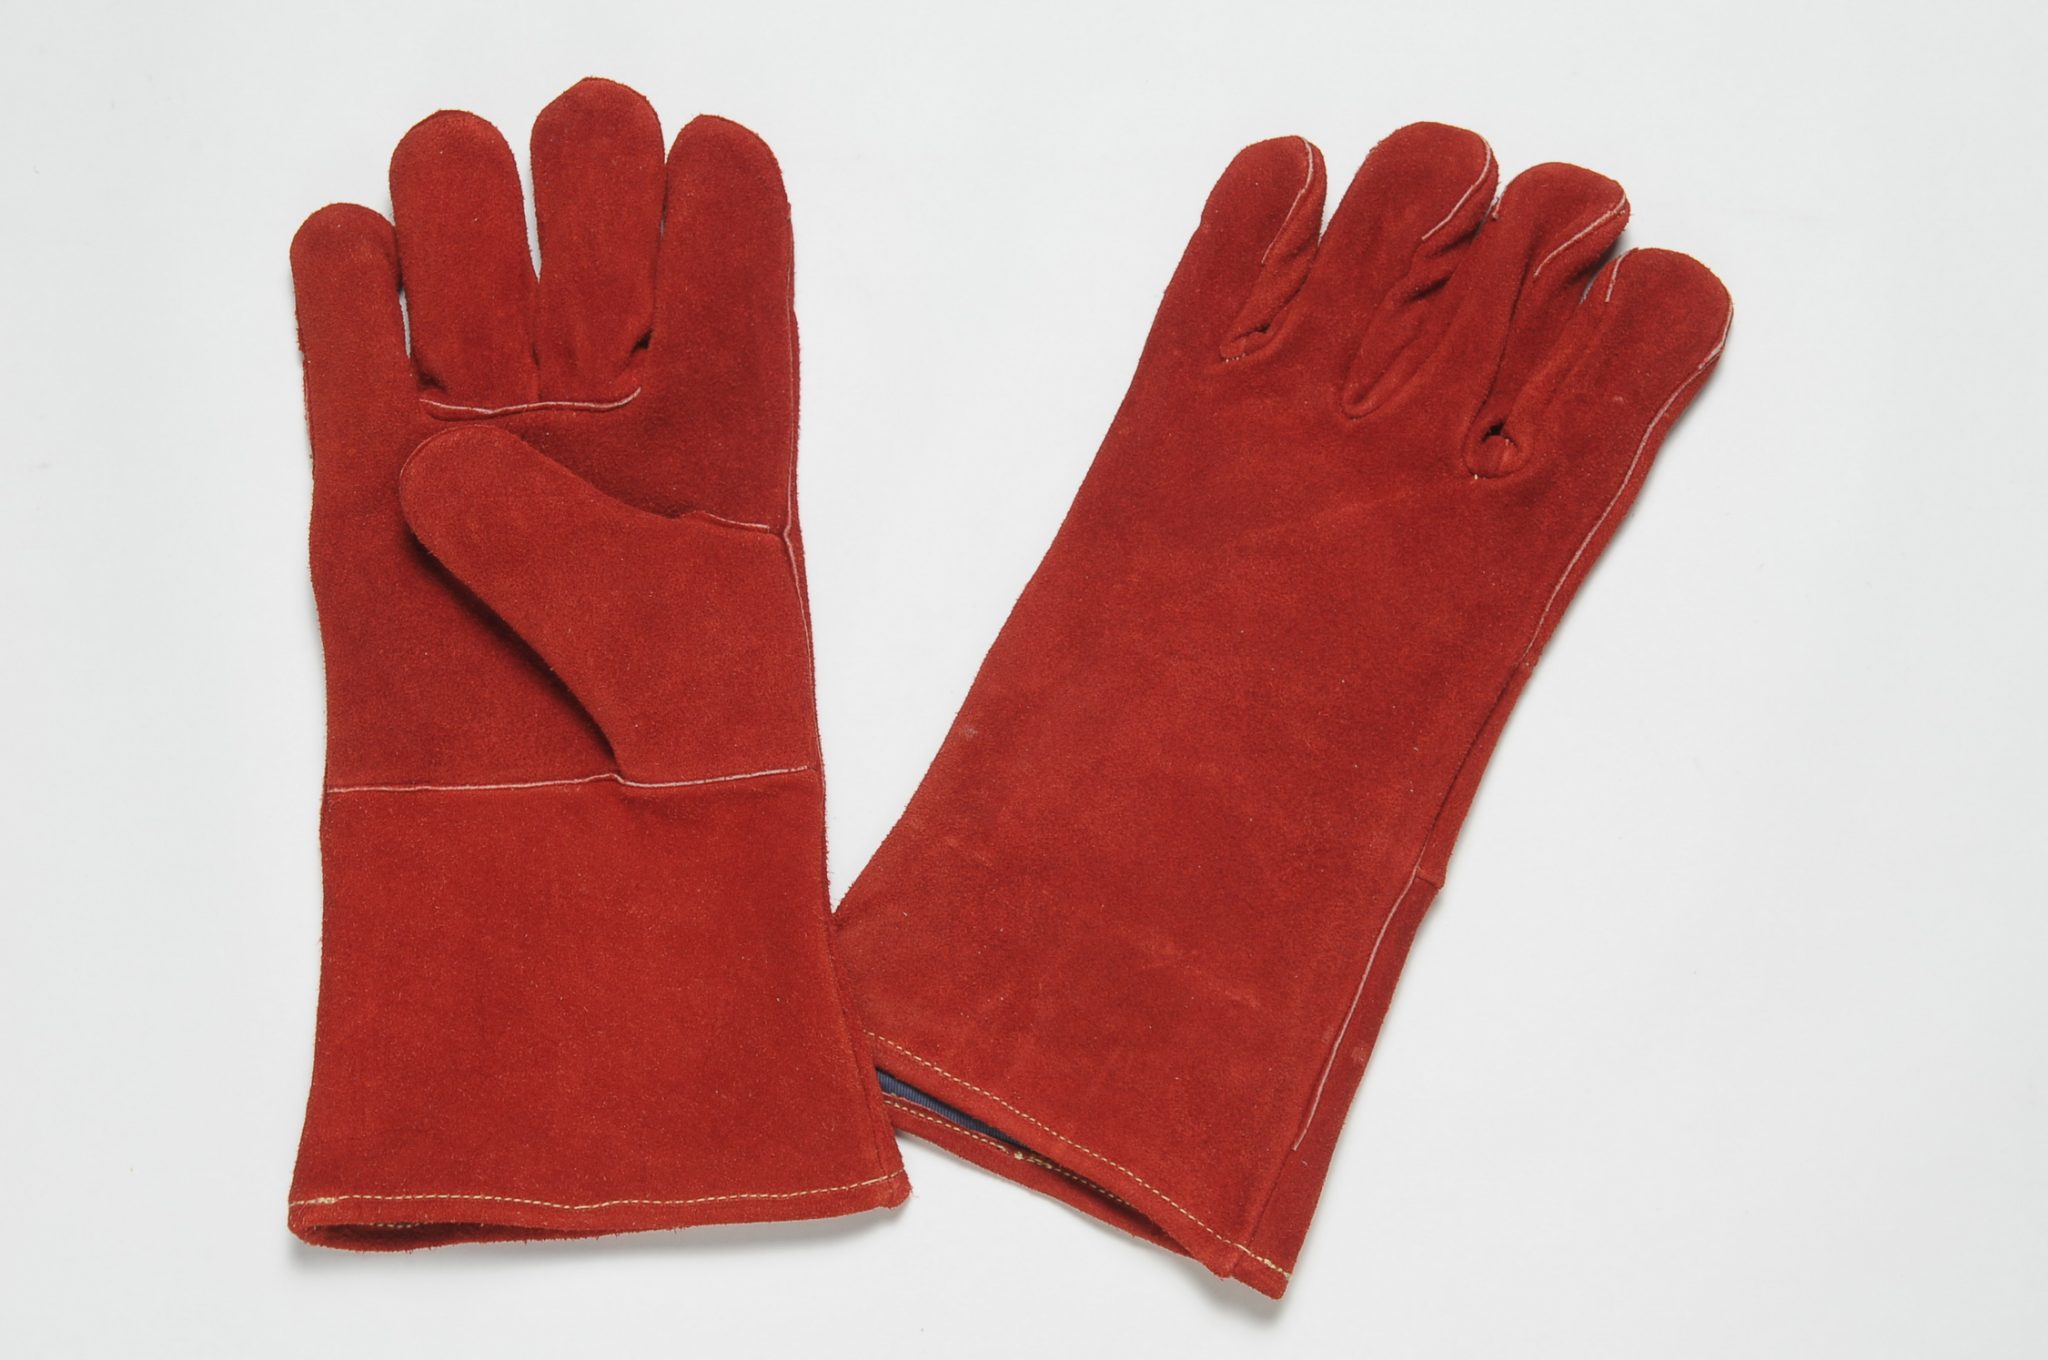 Excellent abrasion resistance, all leather gloves.